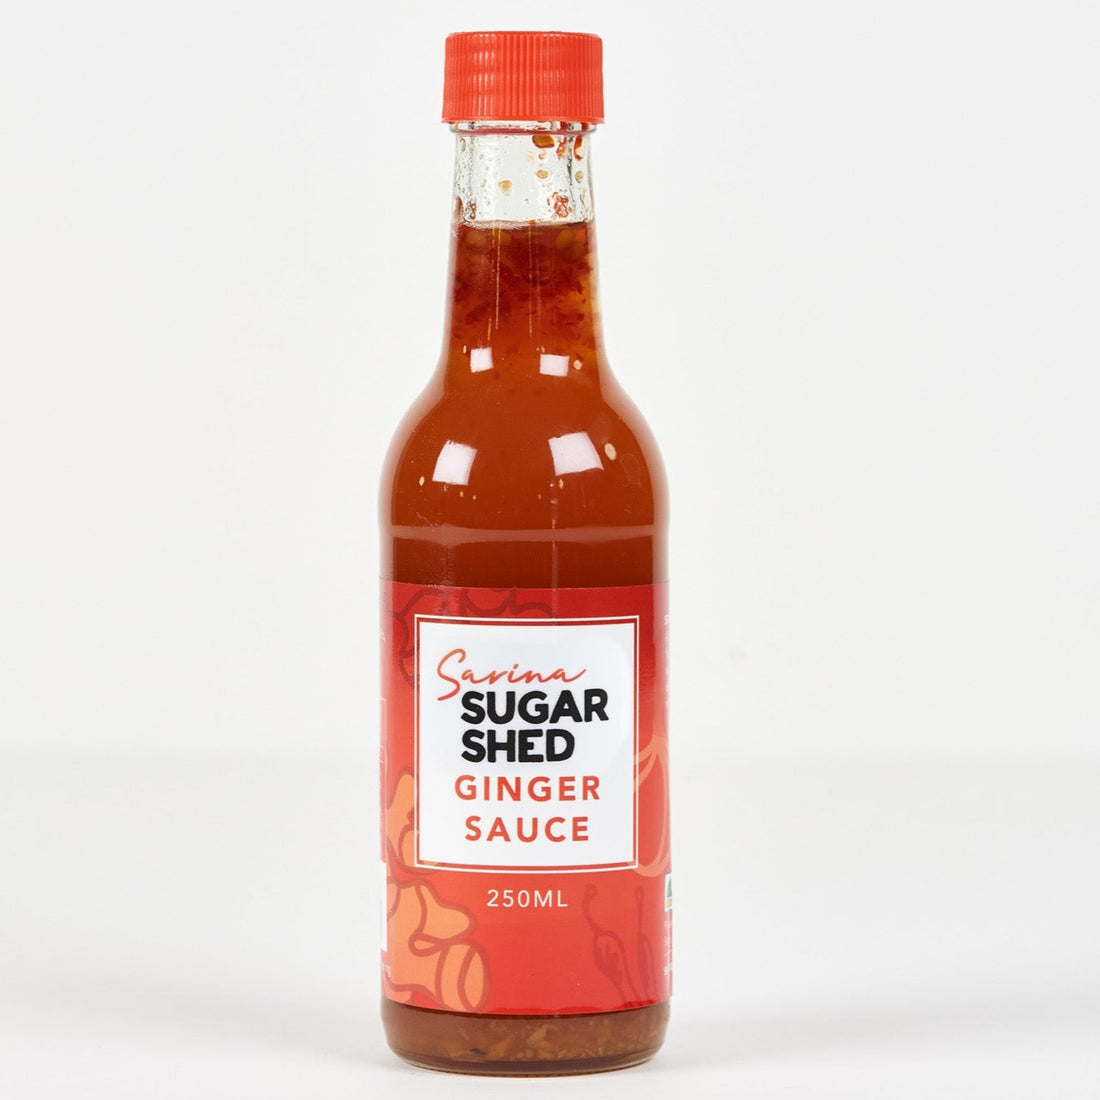 Sarina Sugar Shed Ginger Sauce 250ml